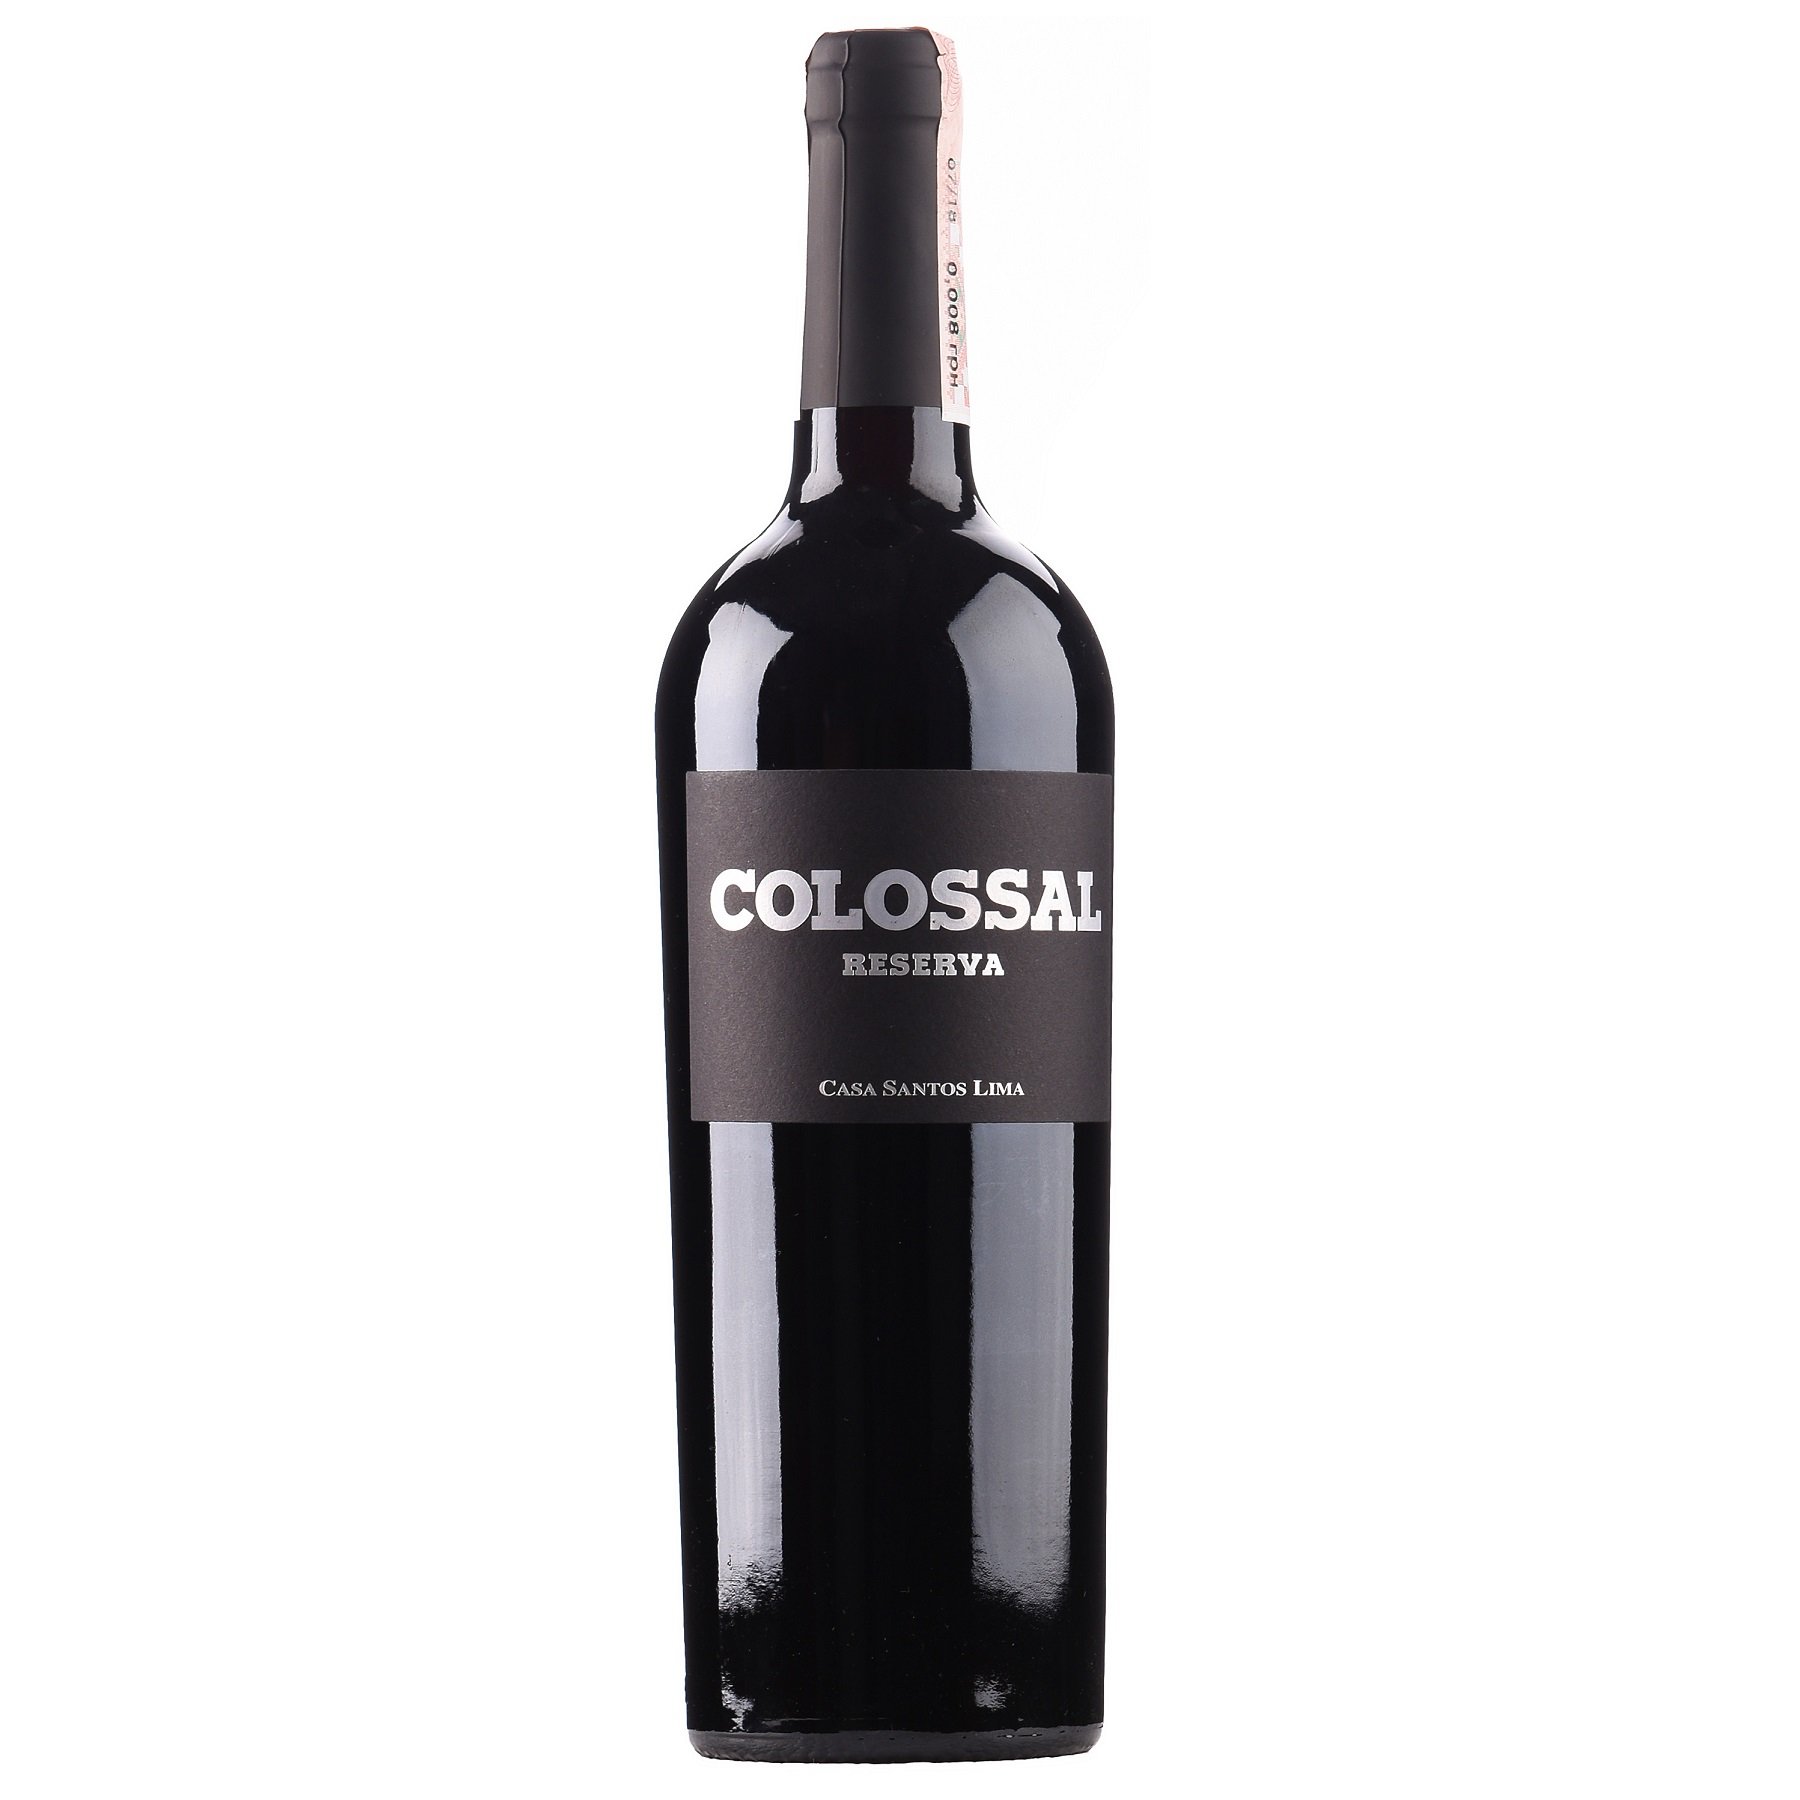 Вино Casa Santos Lima Colossal Reserva IGP, червоне, напівсухе, 14%, 0,75 л (43587) - фото 1